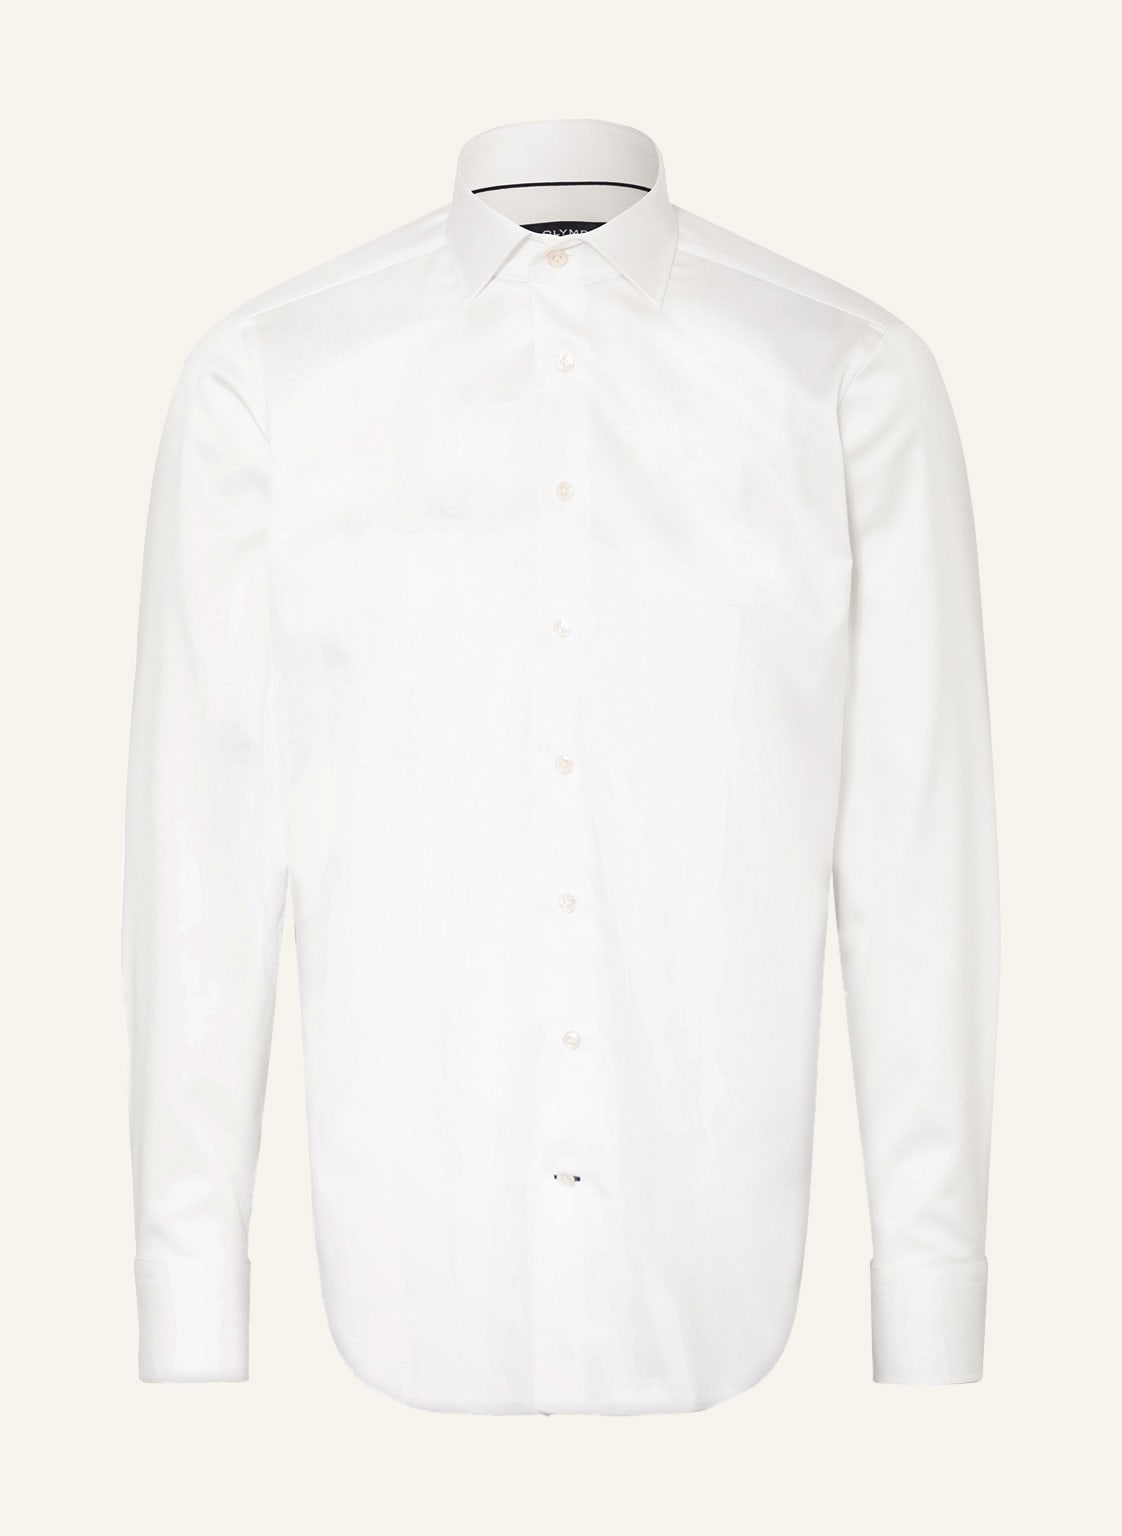 Olymp Signature Hemd Tailored Fit weiss von OLYMP SIGNATURE